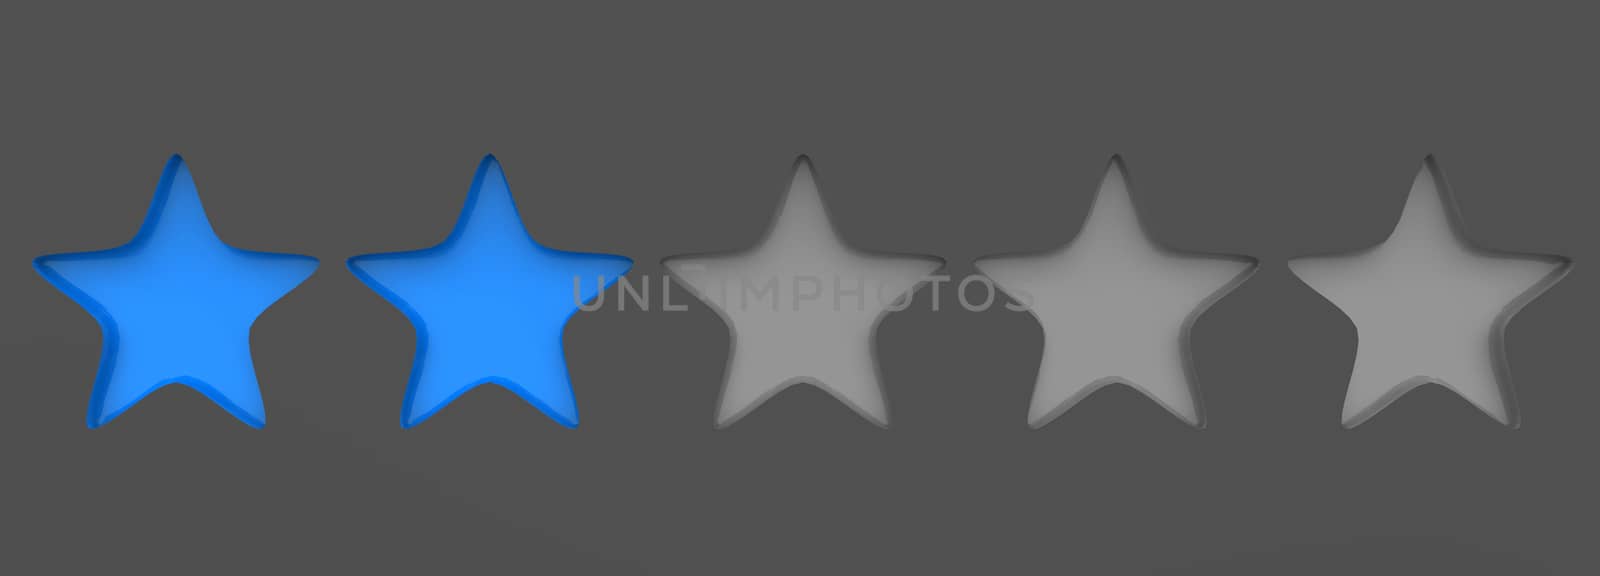 3d two blue star on color background. Render and illustration of golden star for premium